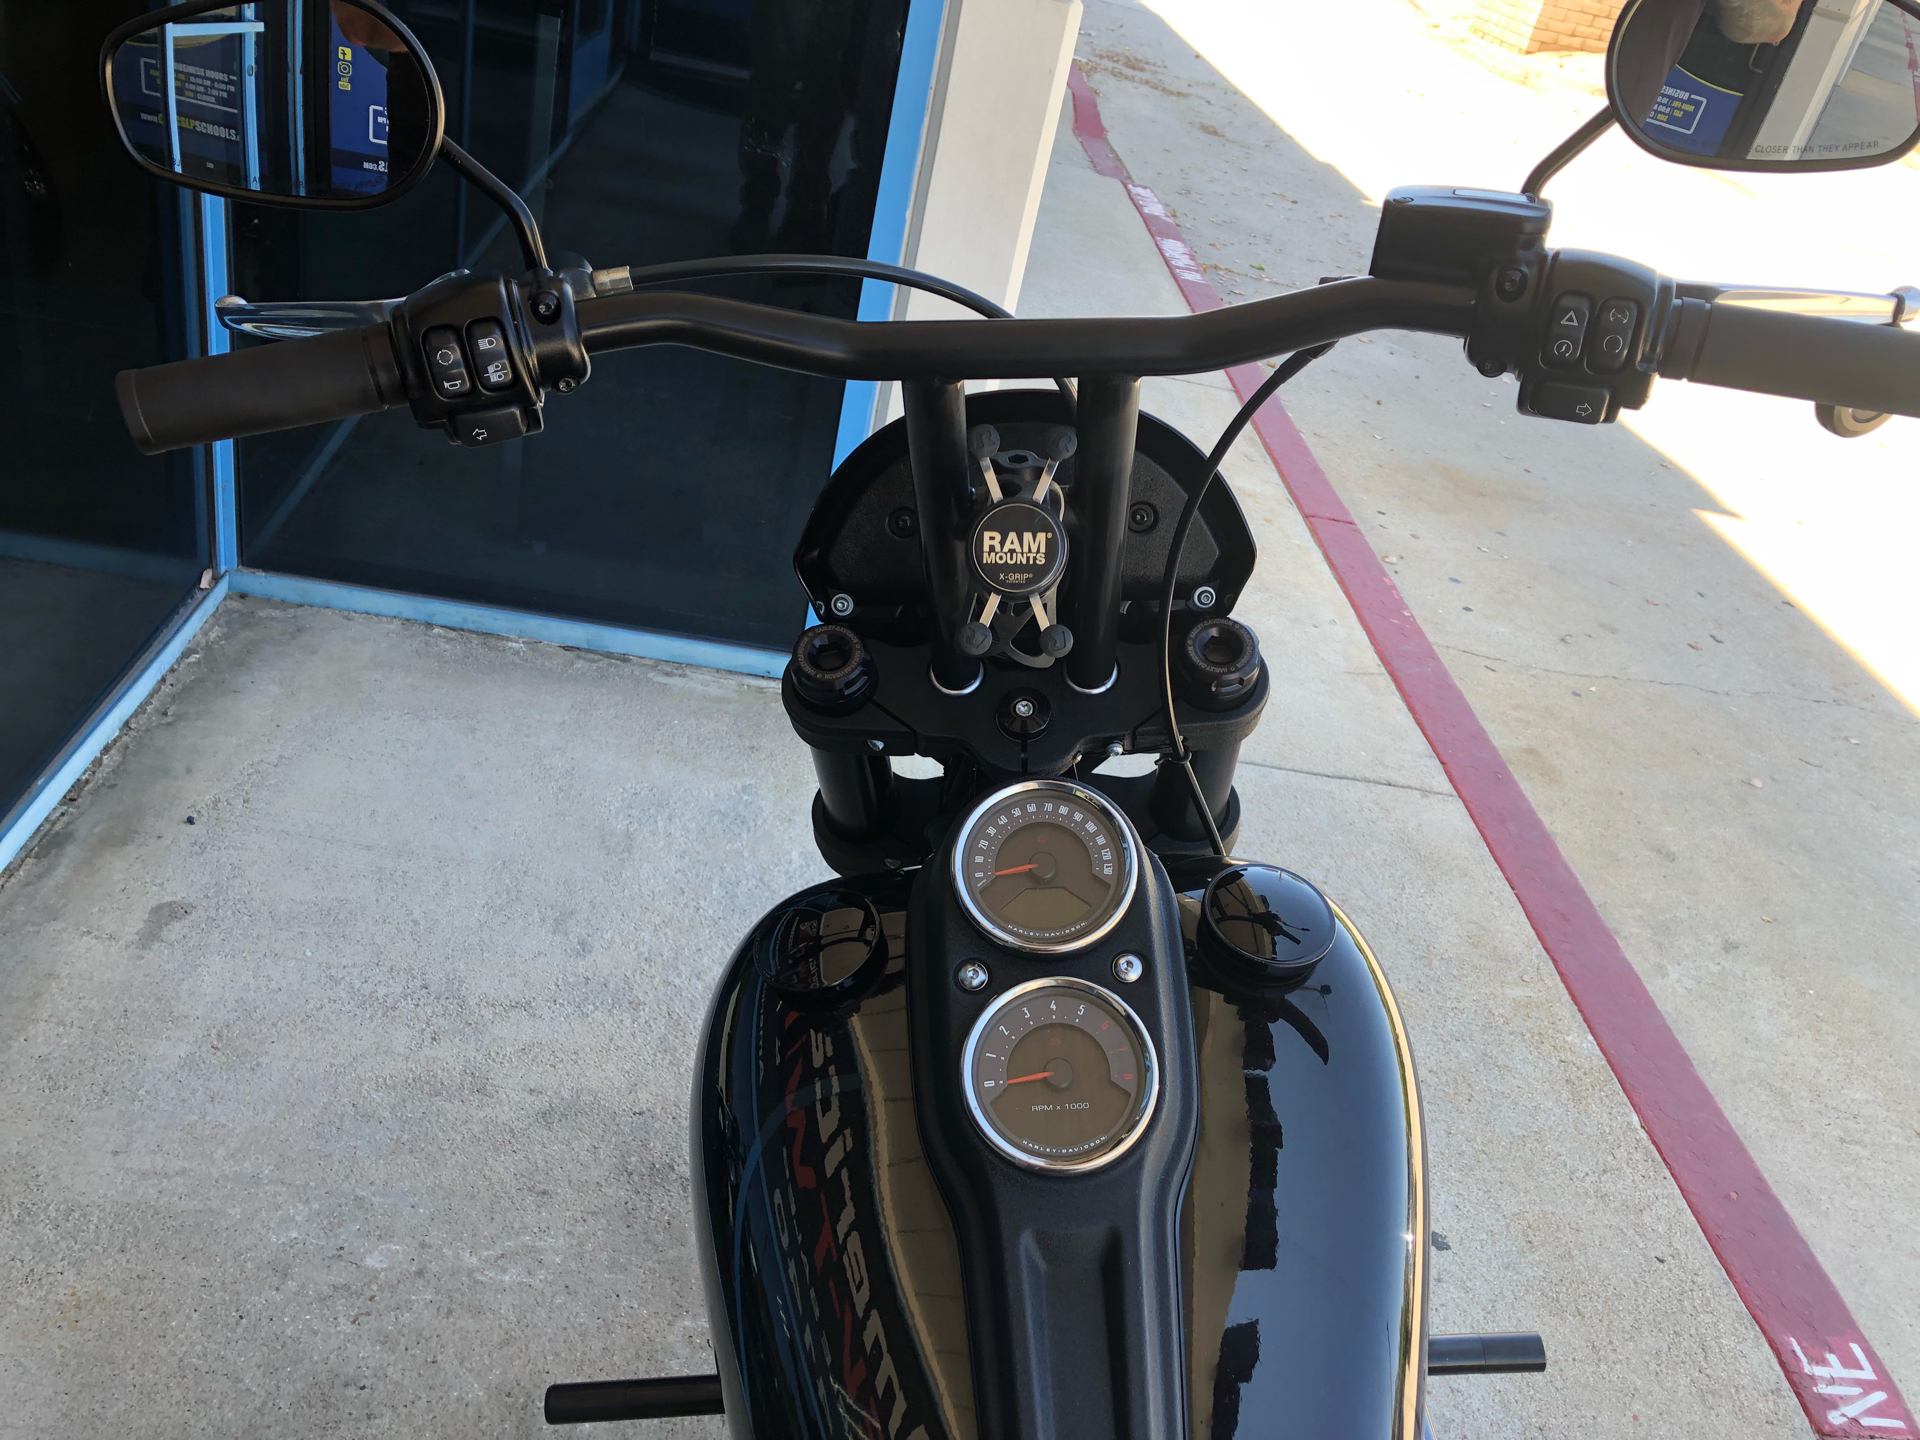 2020 Harley-Davidson Low Rider®S in Temecula, California - Photo 12